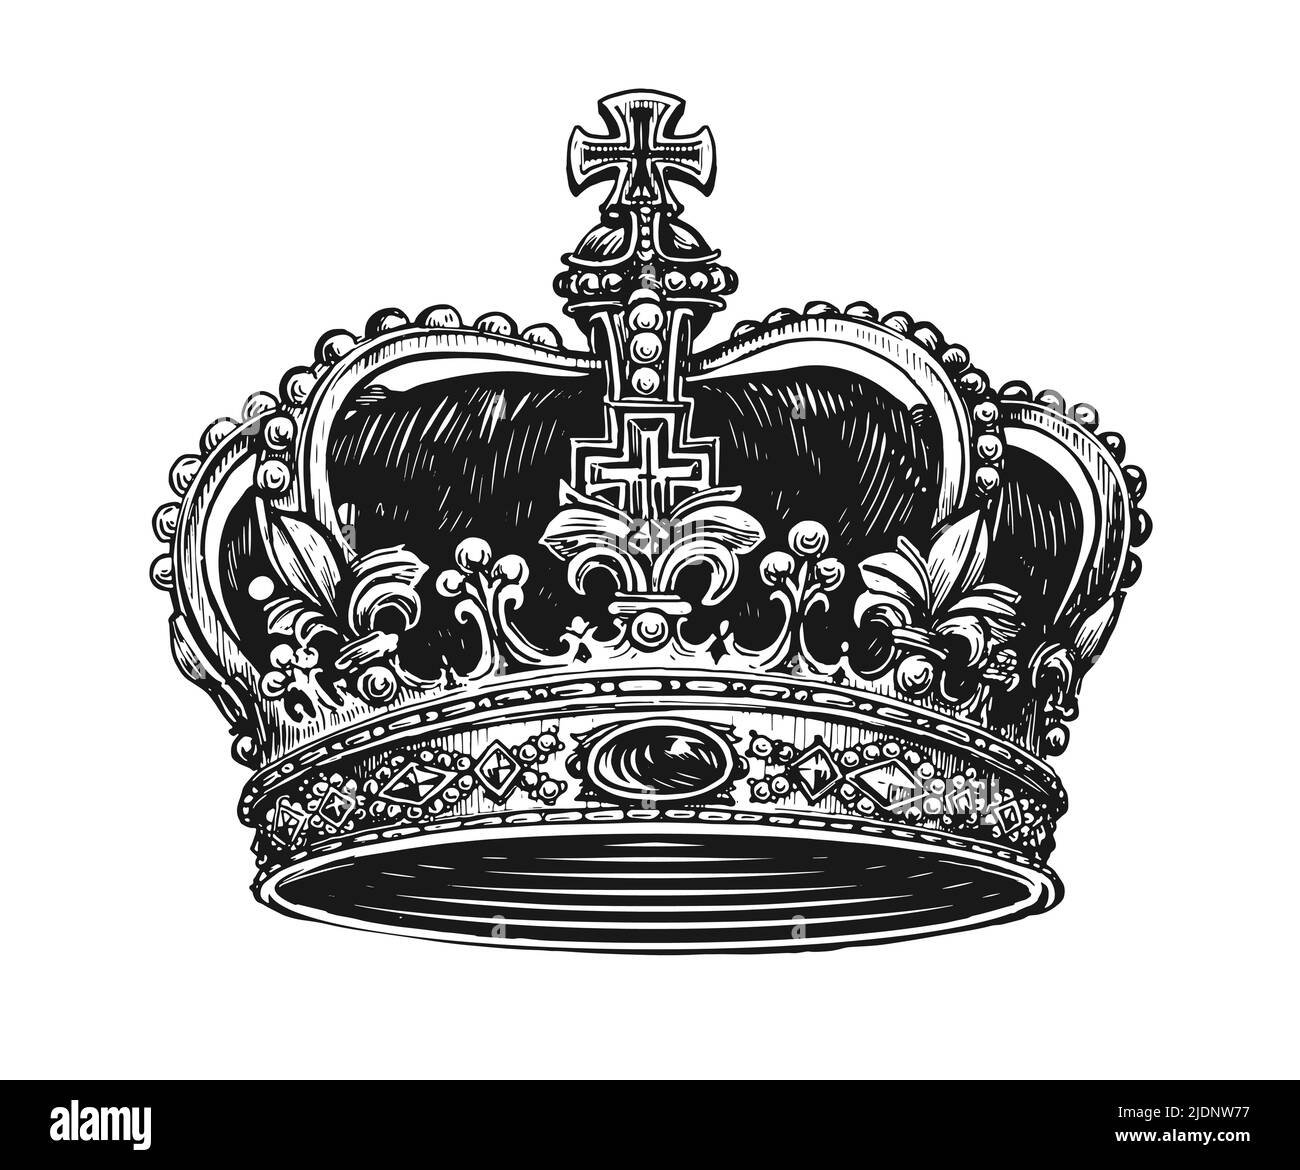 King crown vector. Hand drawn sketch vintage engraved illustration Stock Vector